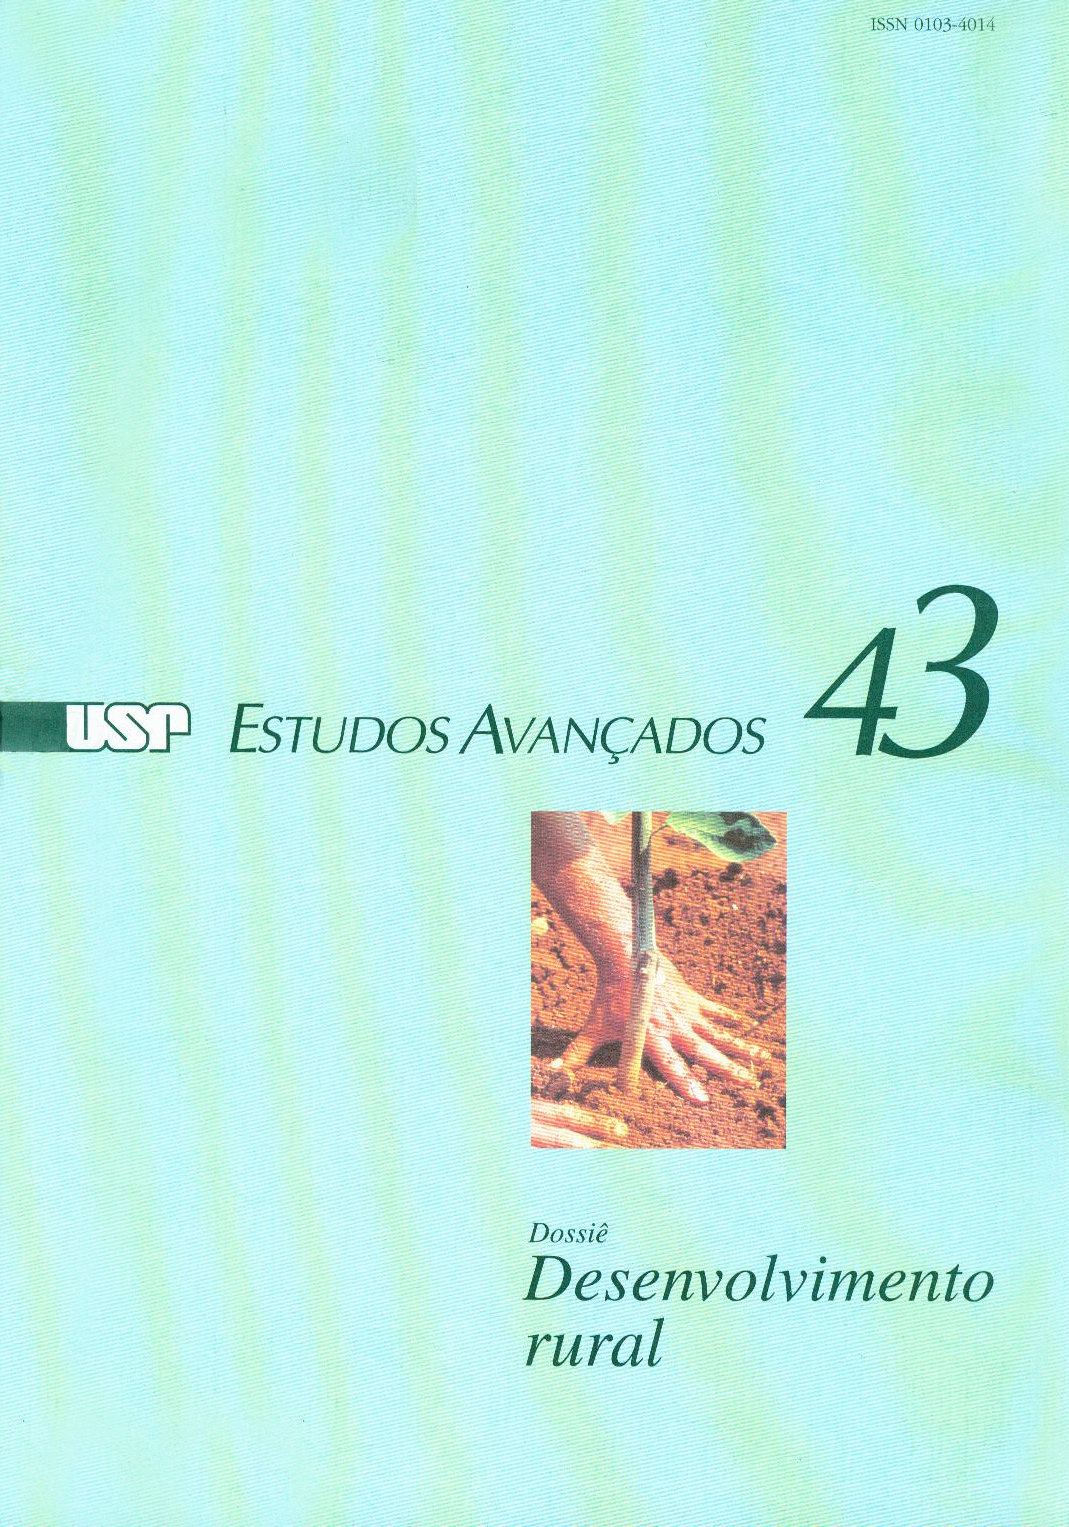 					Visualizar v. 15 n. 43 (2001): Dossiê Desenvolvimento Rural
				